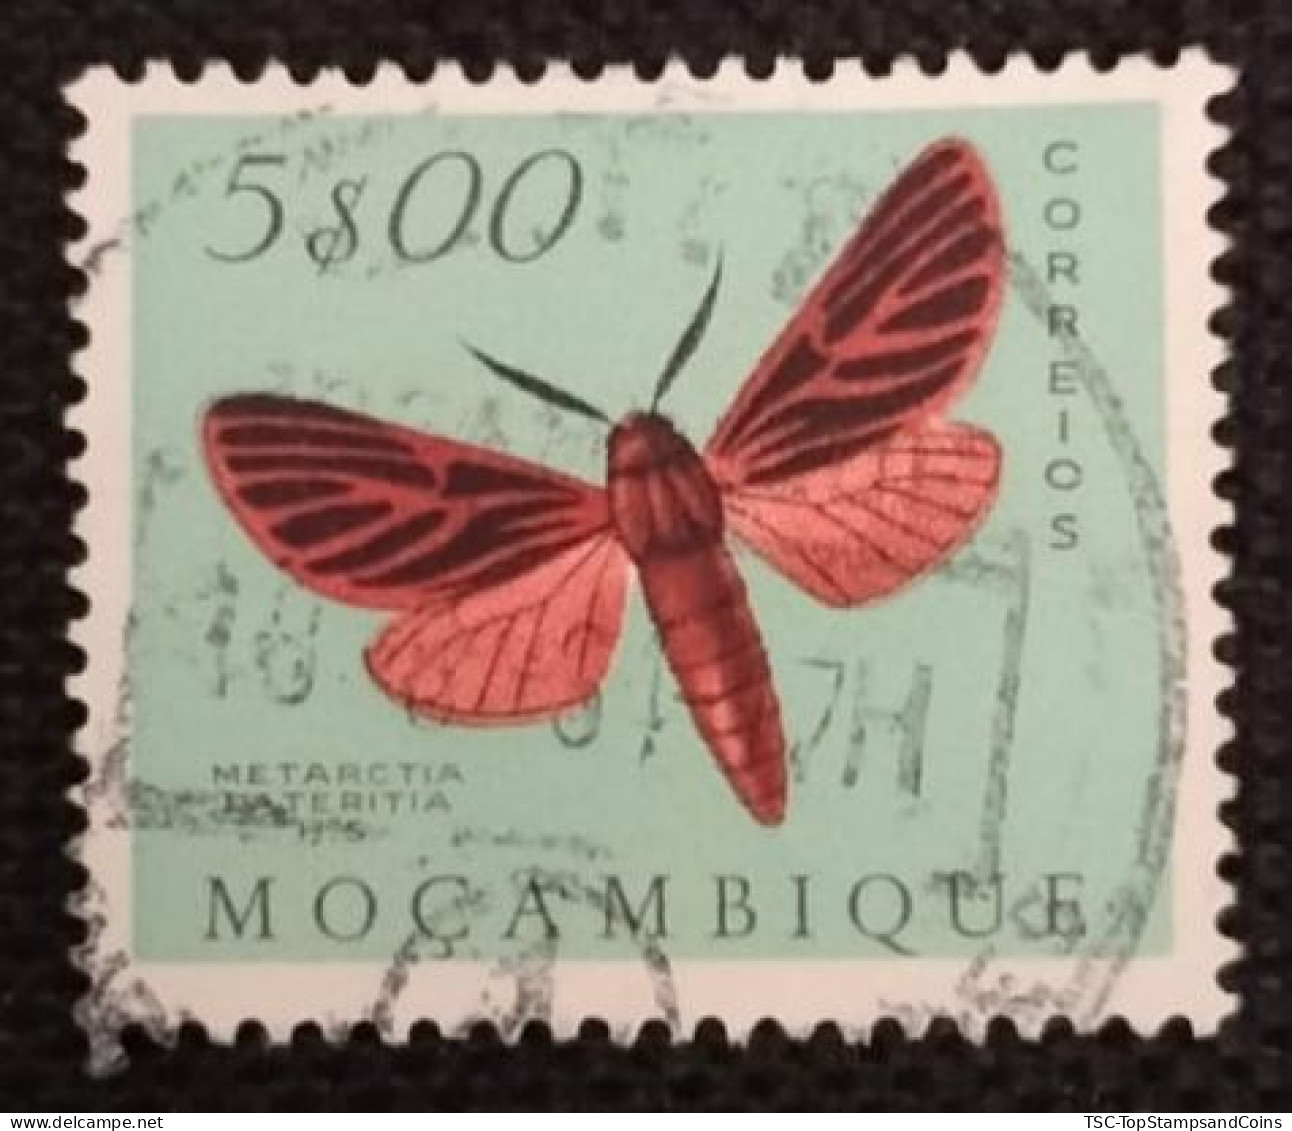 MOZPO0403U7 - Mozambique Butterflies  - 5$00 Used Stamp - Mozambique - 1953 - Mosambik